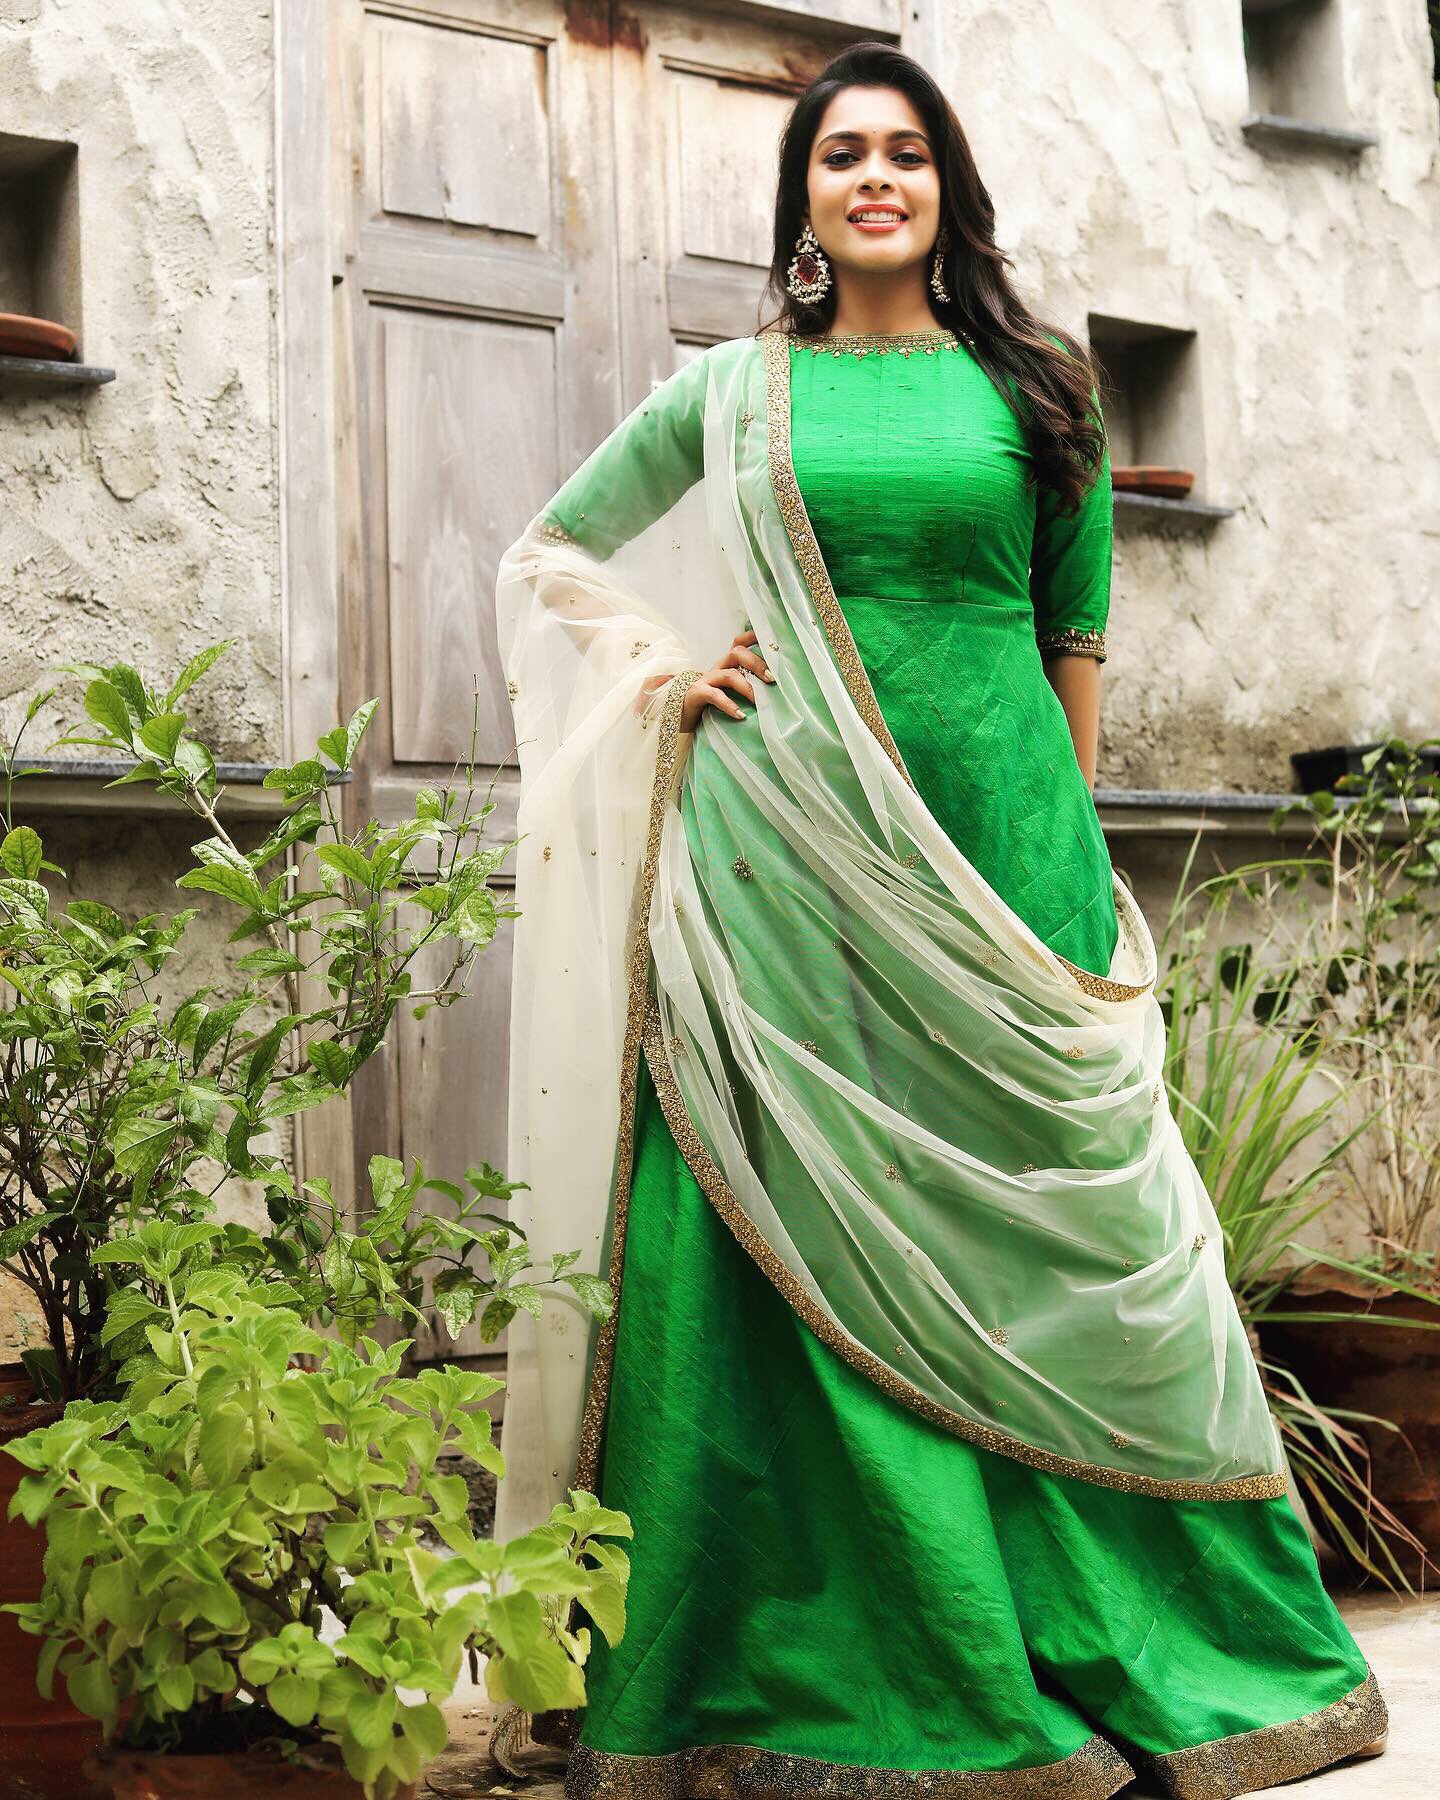 Elegant Beauty Kiki Vijay Latest Pictures